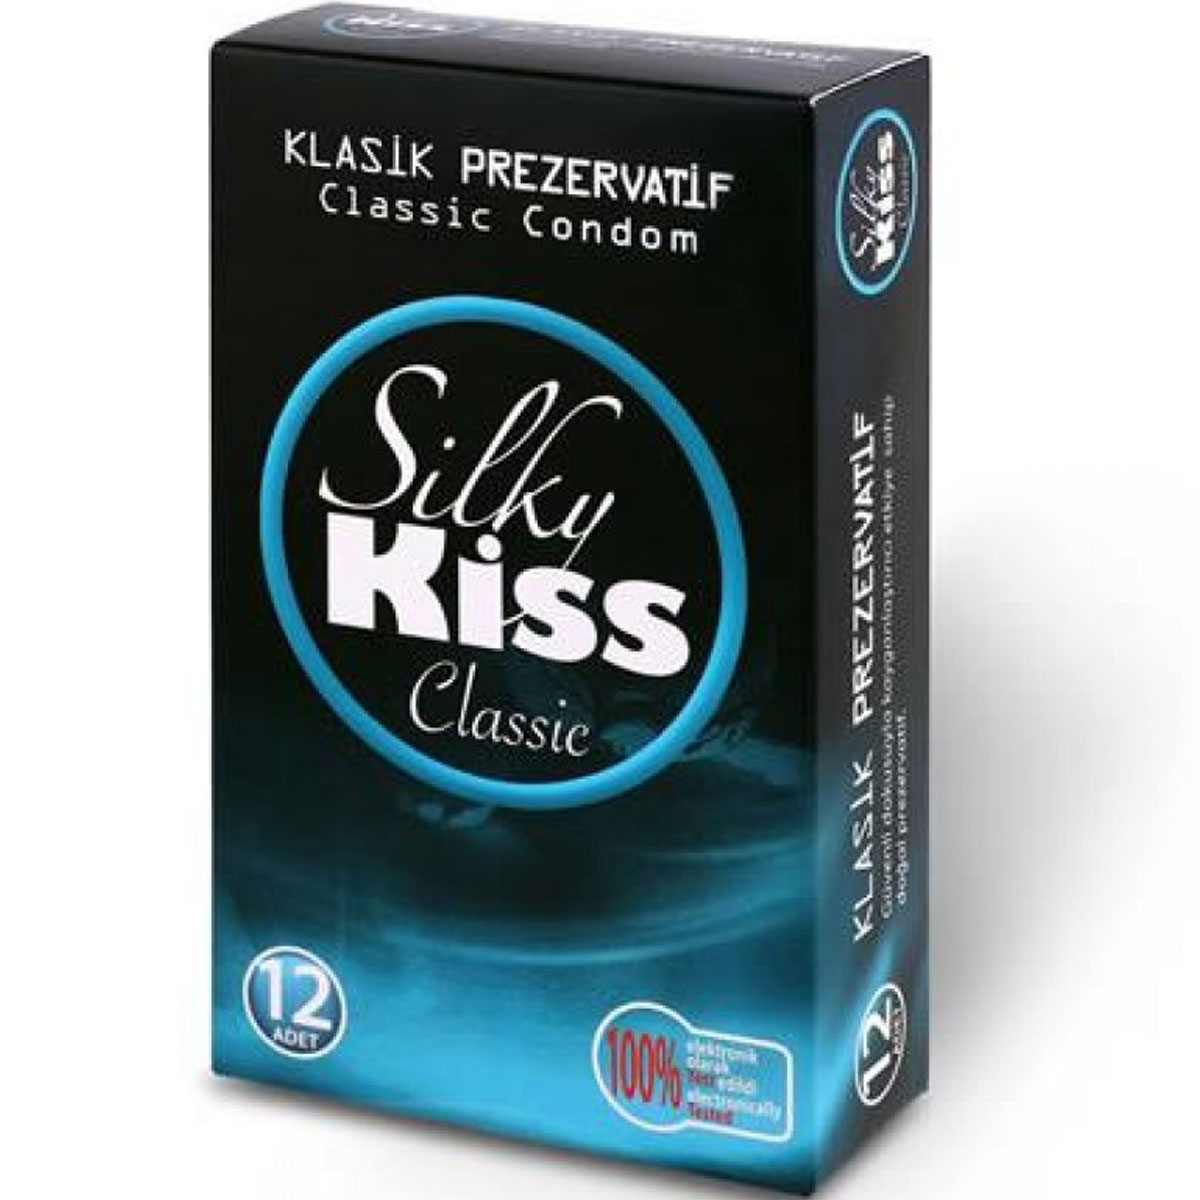 Silky Kiss Klasik Prezervatif C-1575